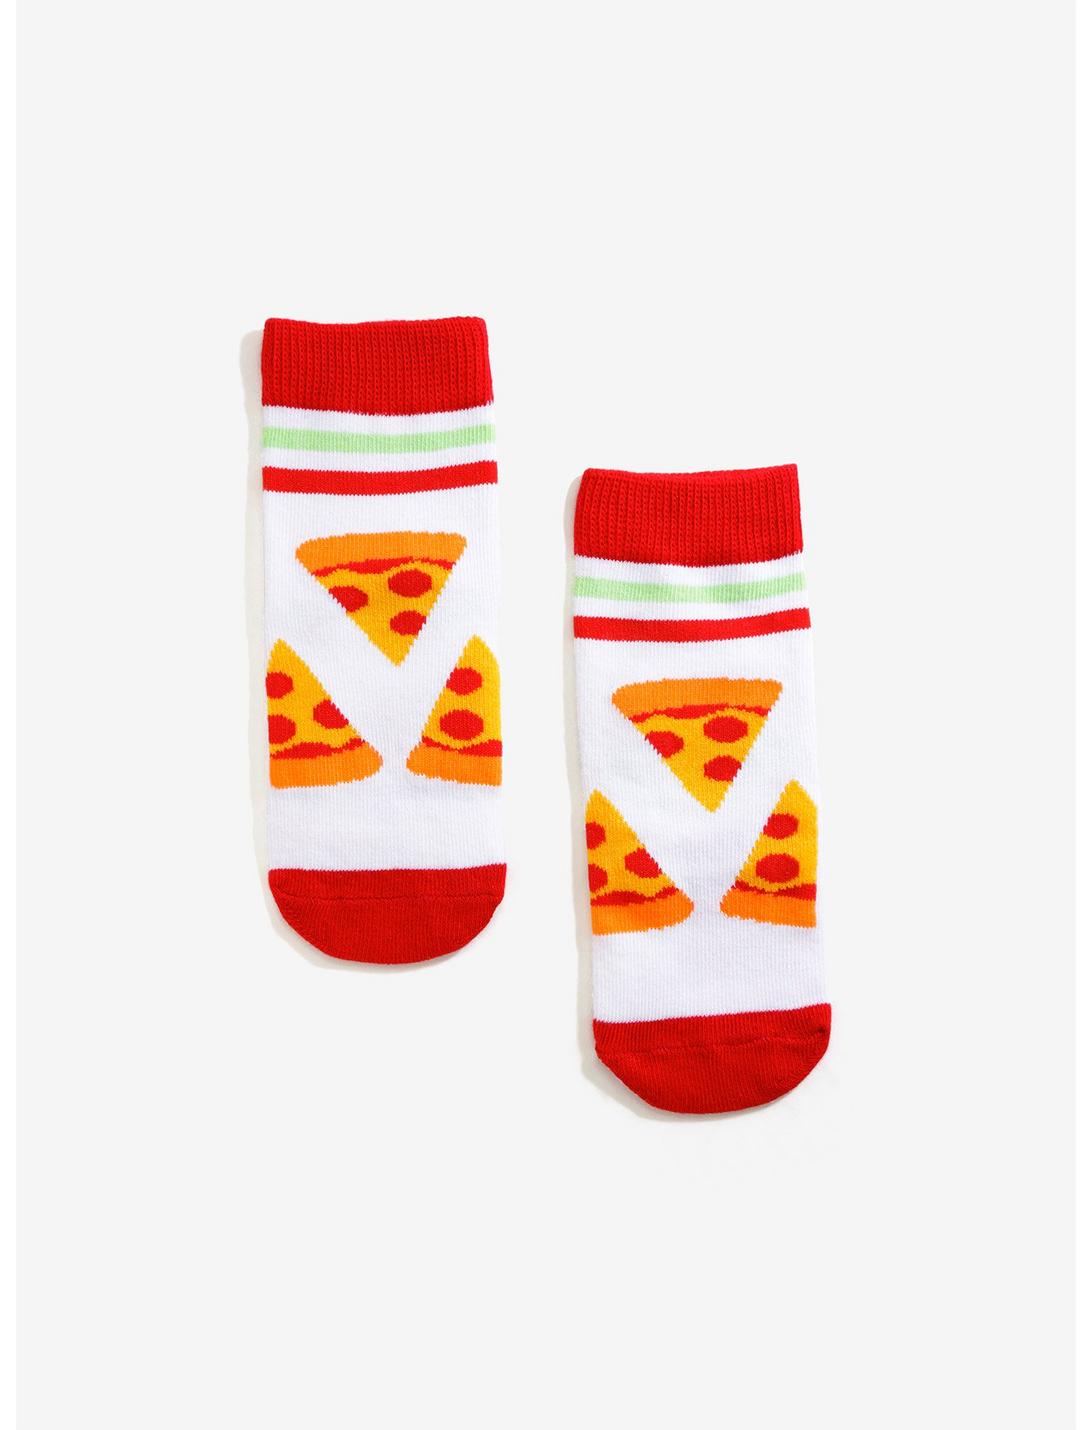 Extra Cheese Toddler Socks, , hi-res